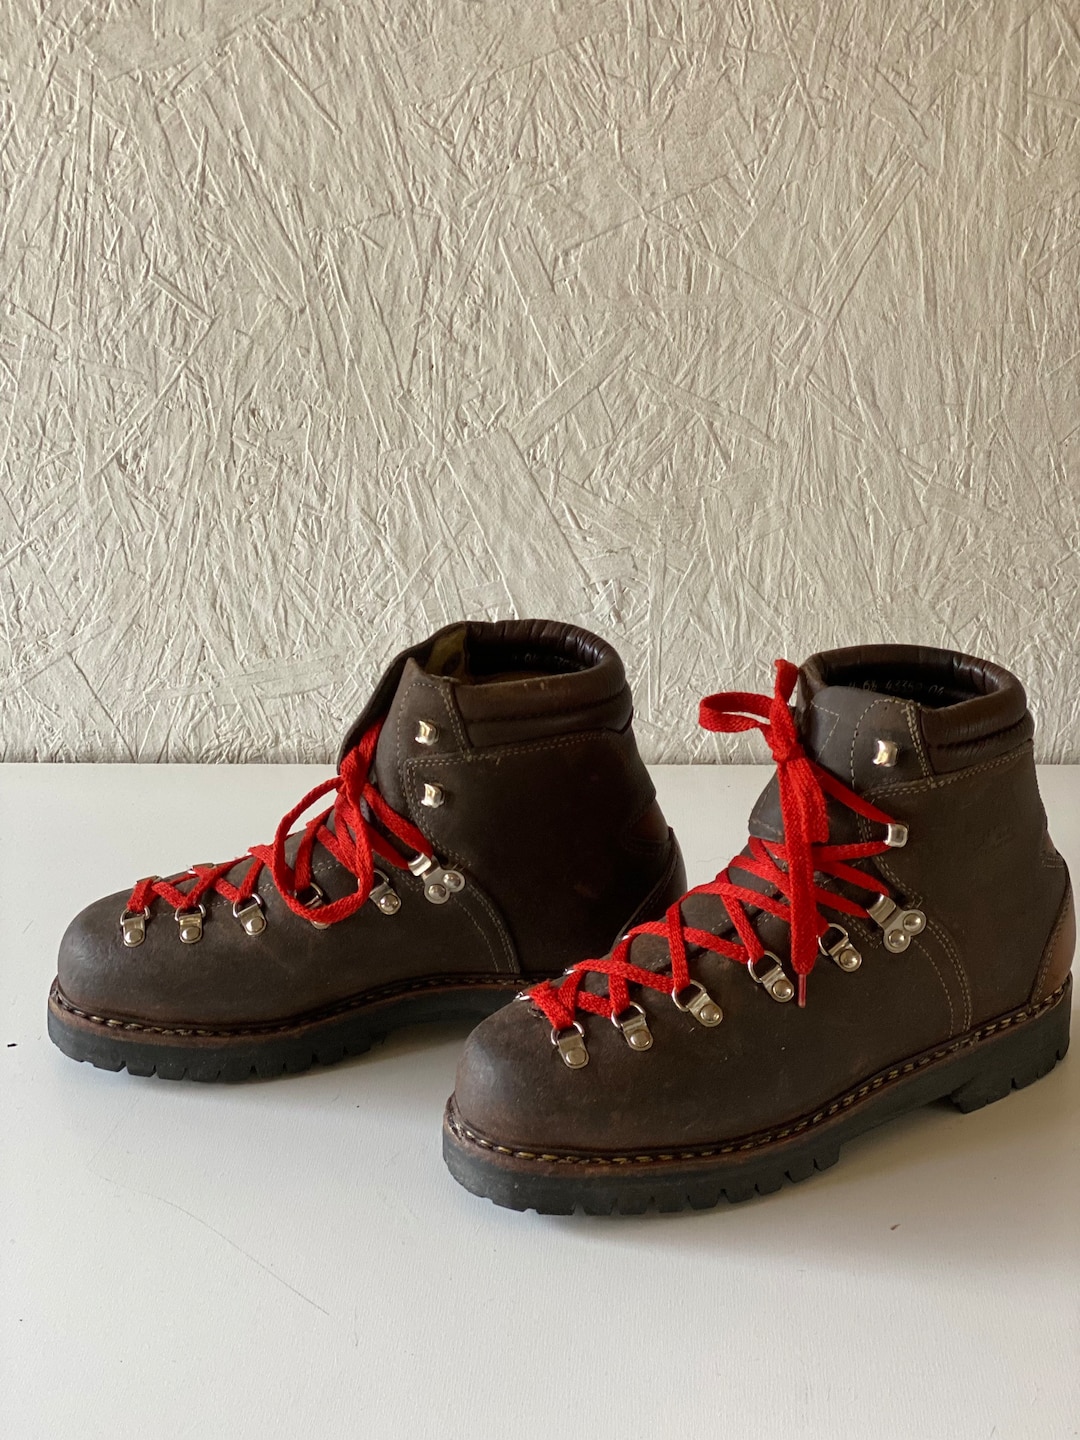 Vintage Lowa Alpine Hiking Boots Leather Mountaineering Dark - Etsy